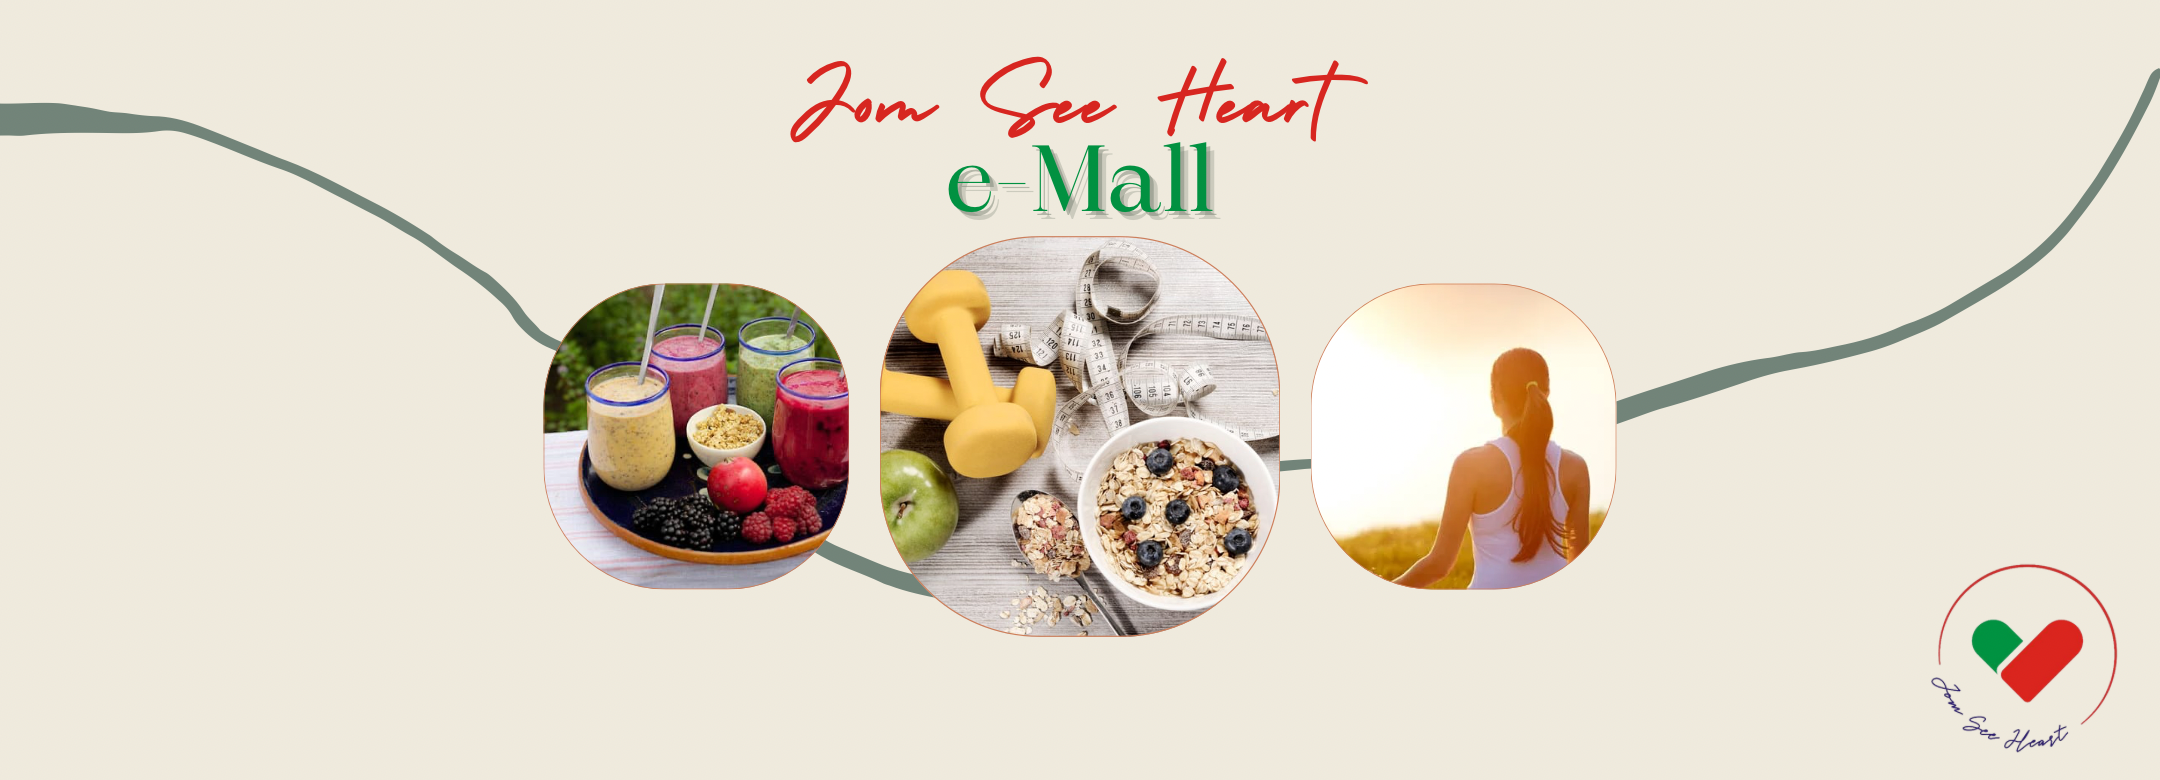 Jom See Heart Mall